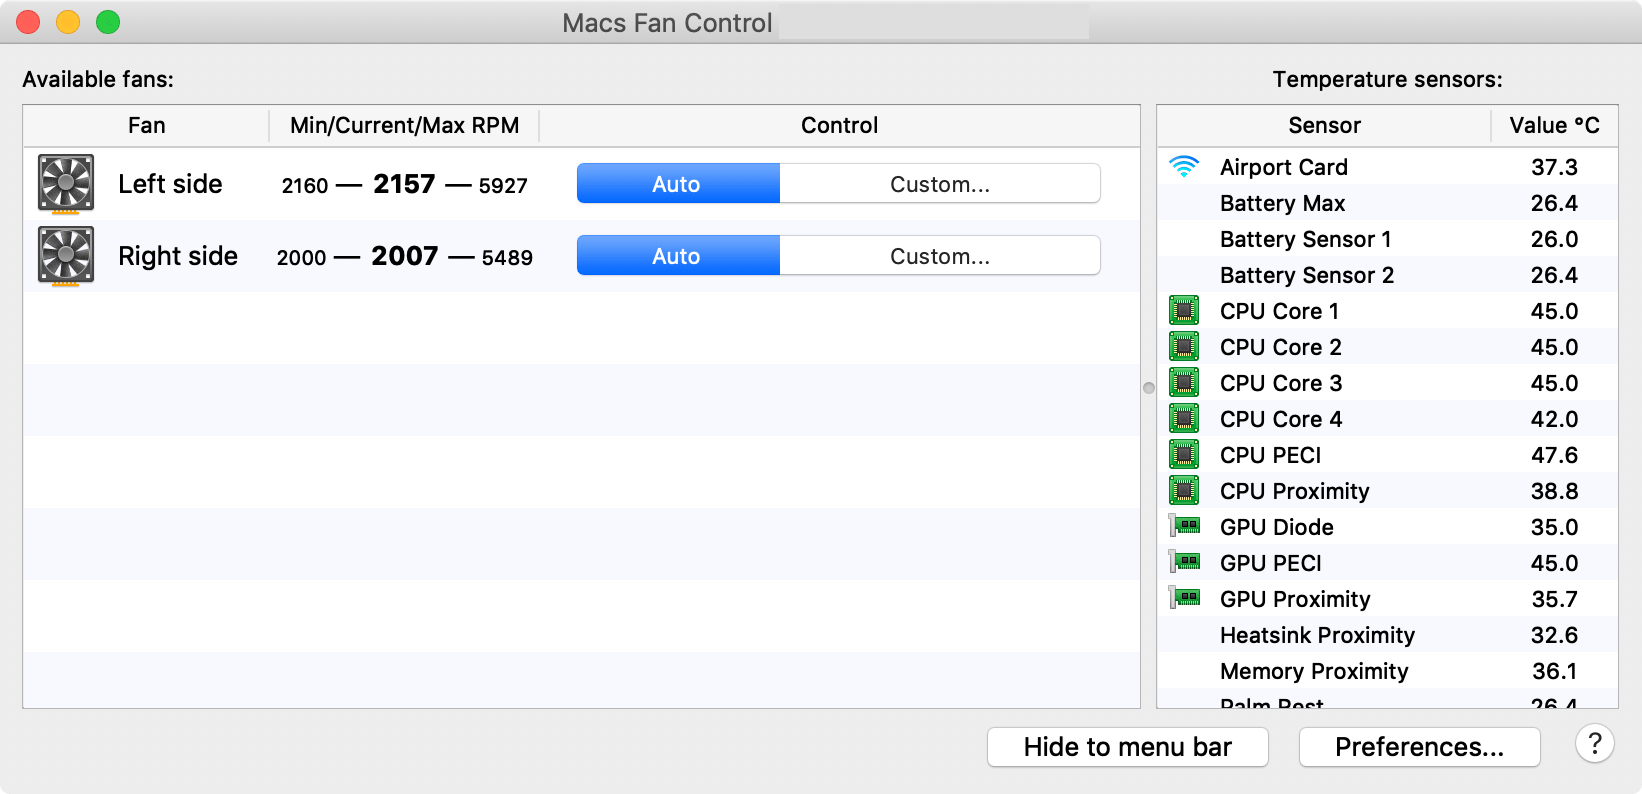 Mac fan control download free mac